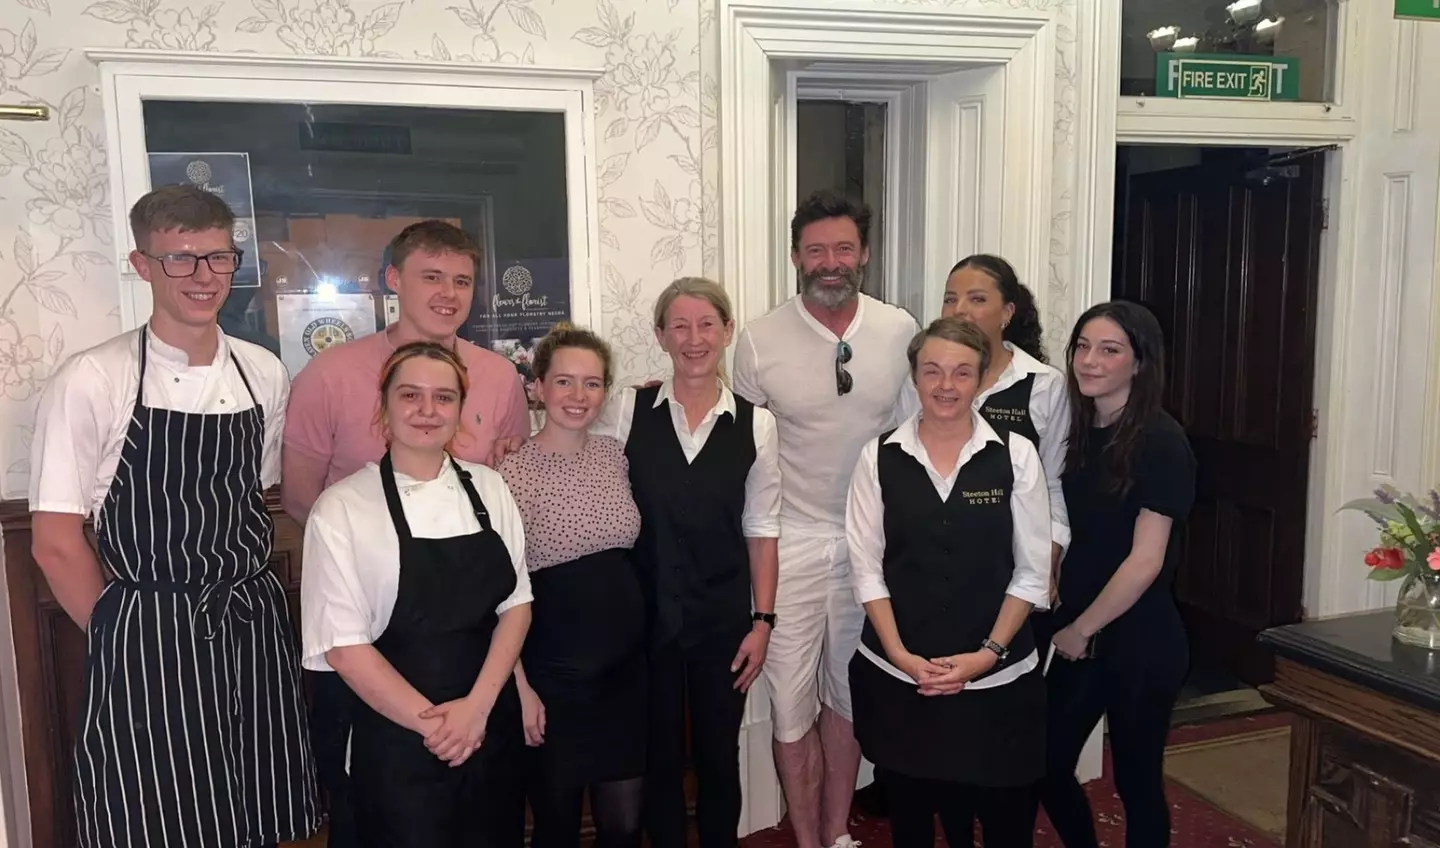 Hugh Jackman with the staff at Steeton Hall Hotel.